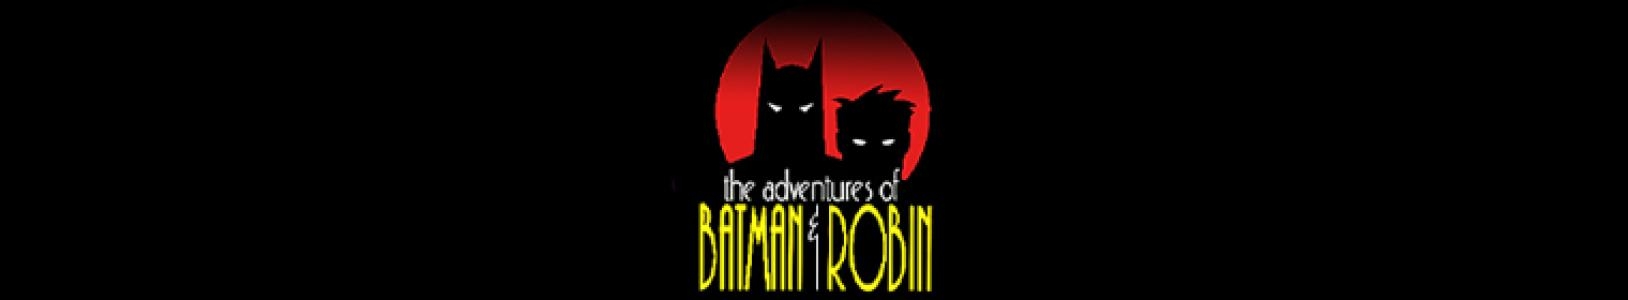 The Adventures of Batman & Robin banner